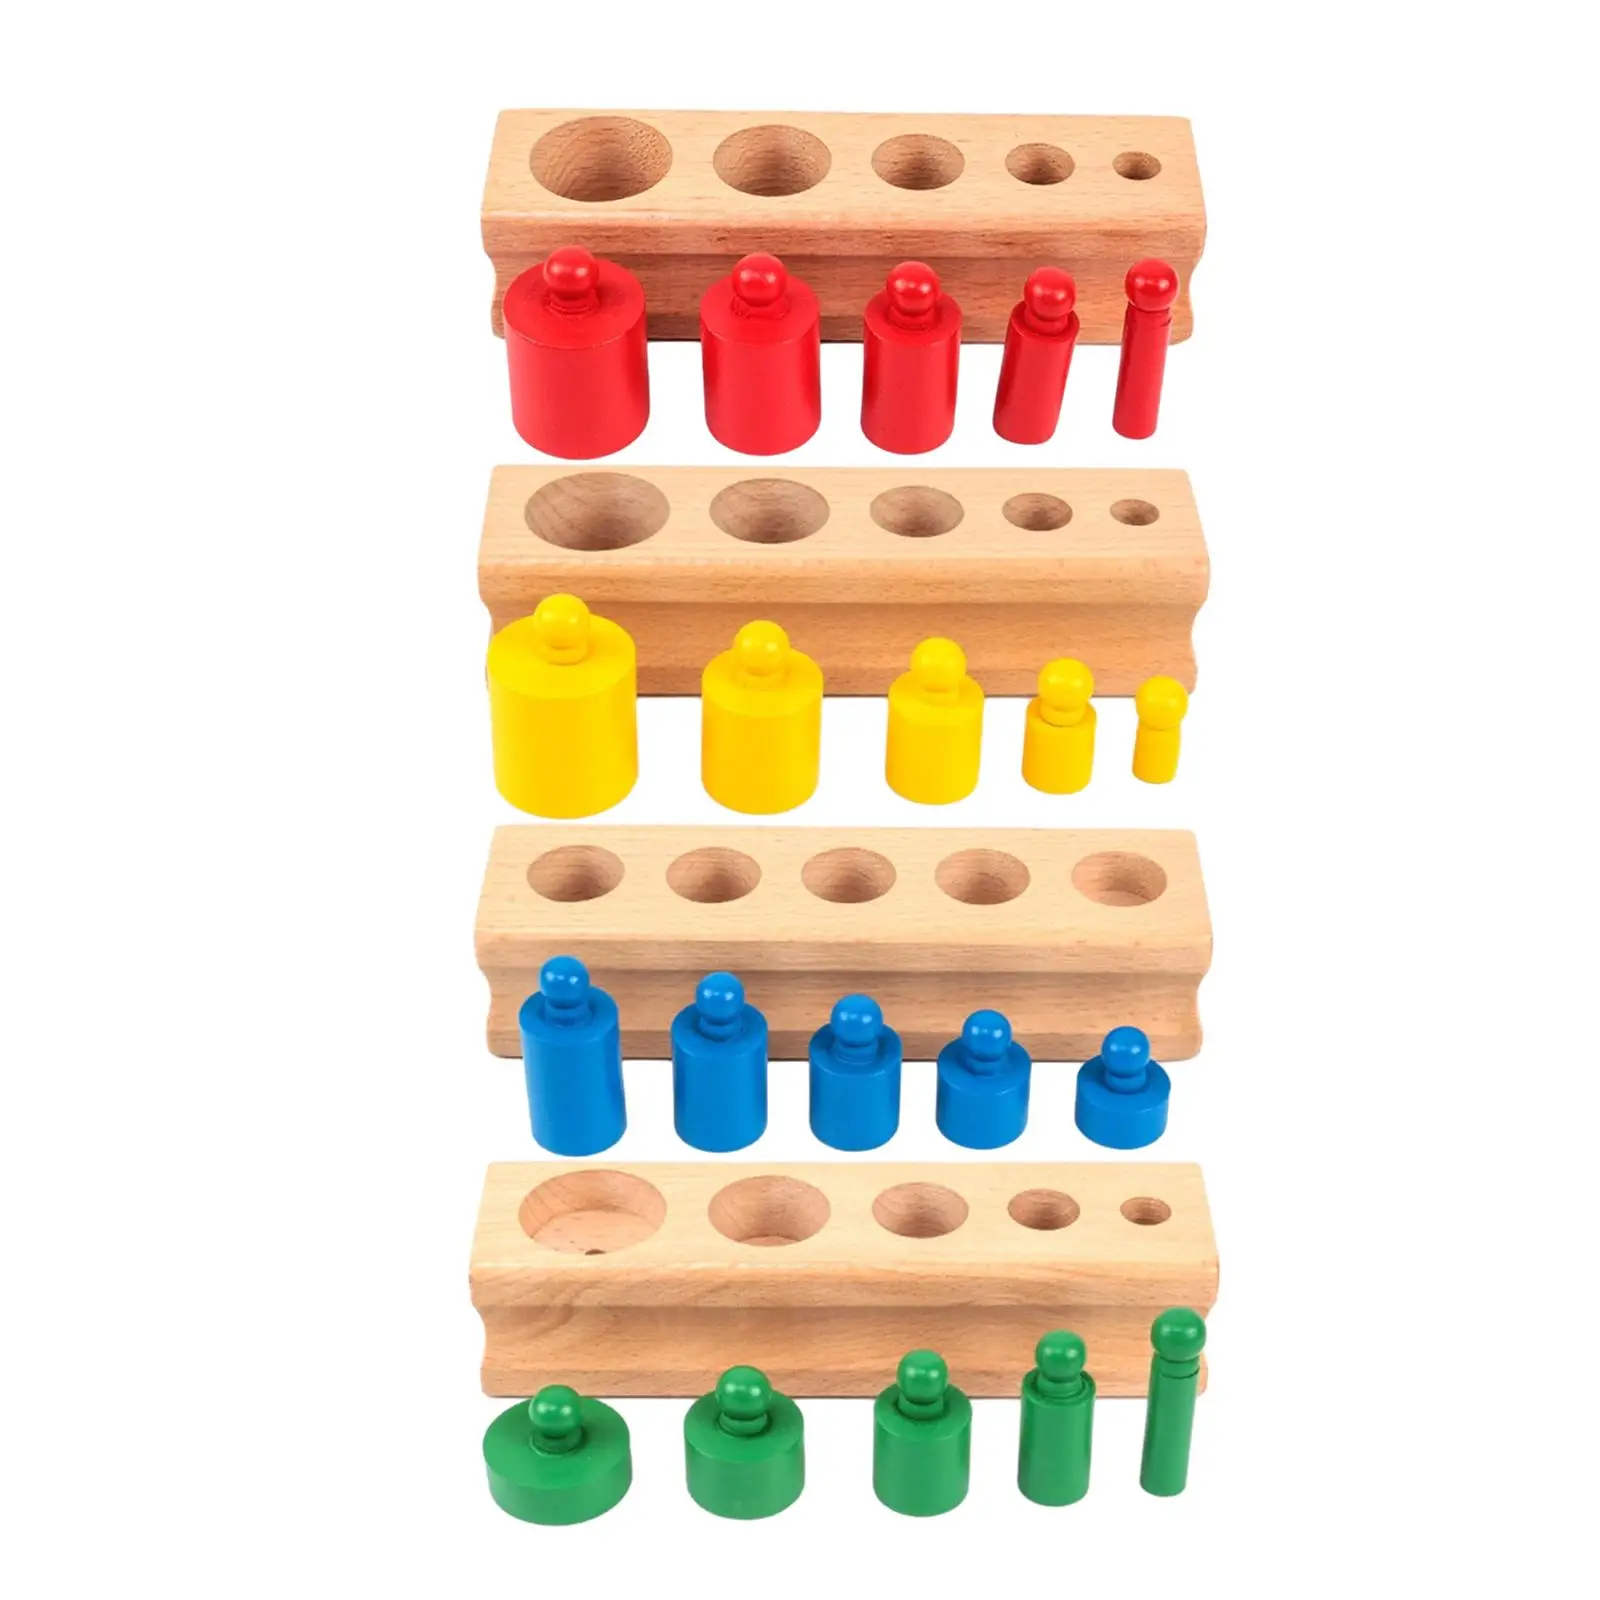 4x Knobbed Cylinders Blocks Socket Montessori Toy for Preschool Toys Baby